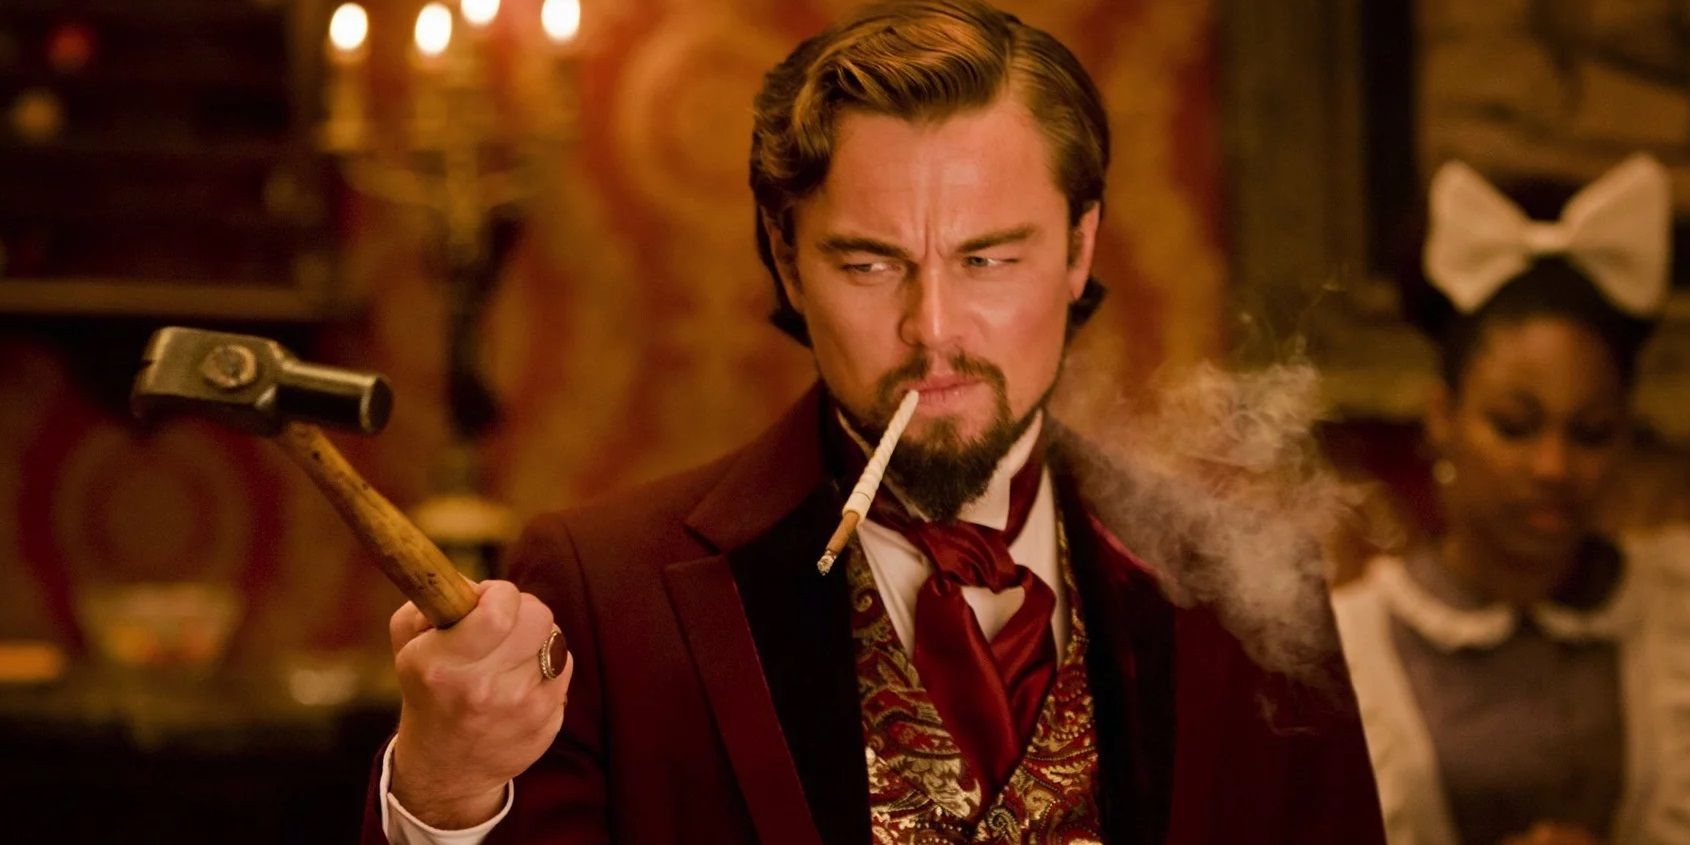 The 10 Best Movies Starring Leonardo DiCaprio (According To Metacritic)